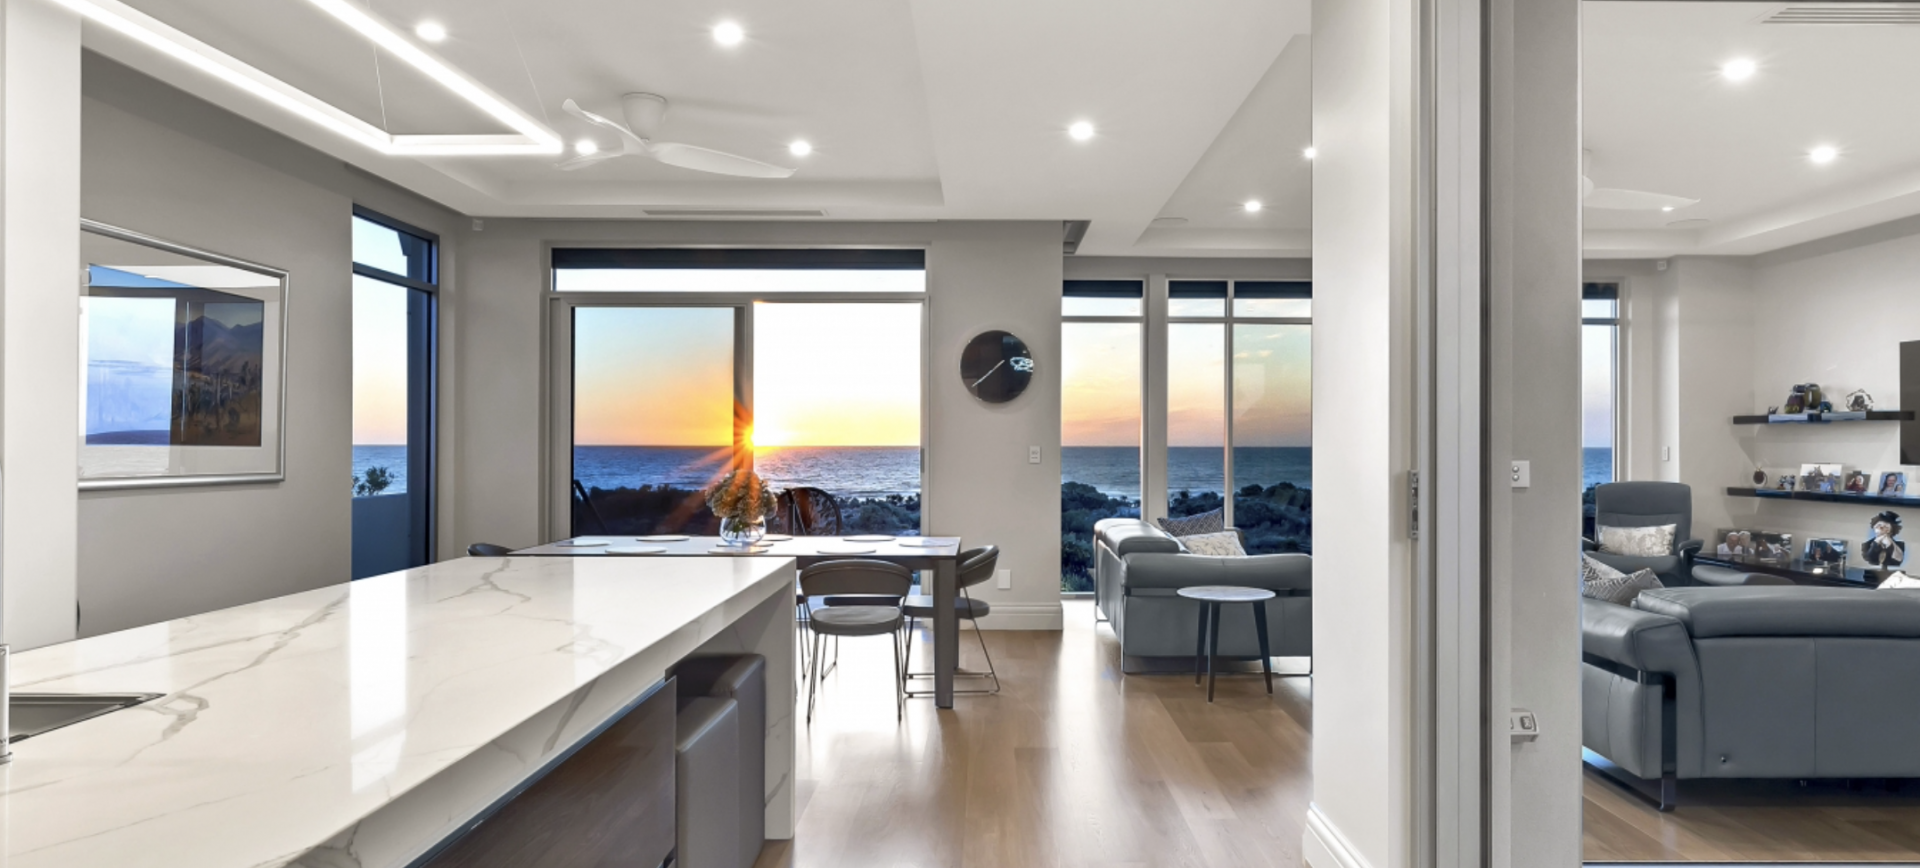 Luxury Home Builder Adelaide Predictsite - Samuel James Homes